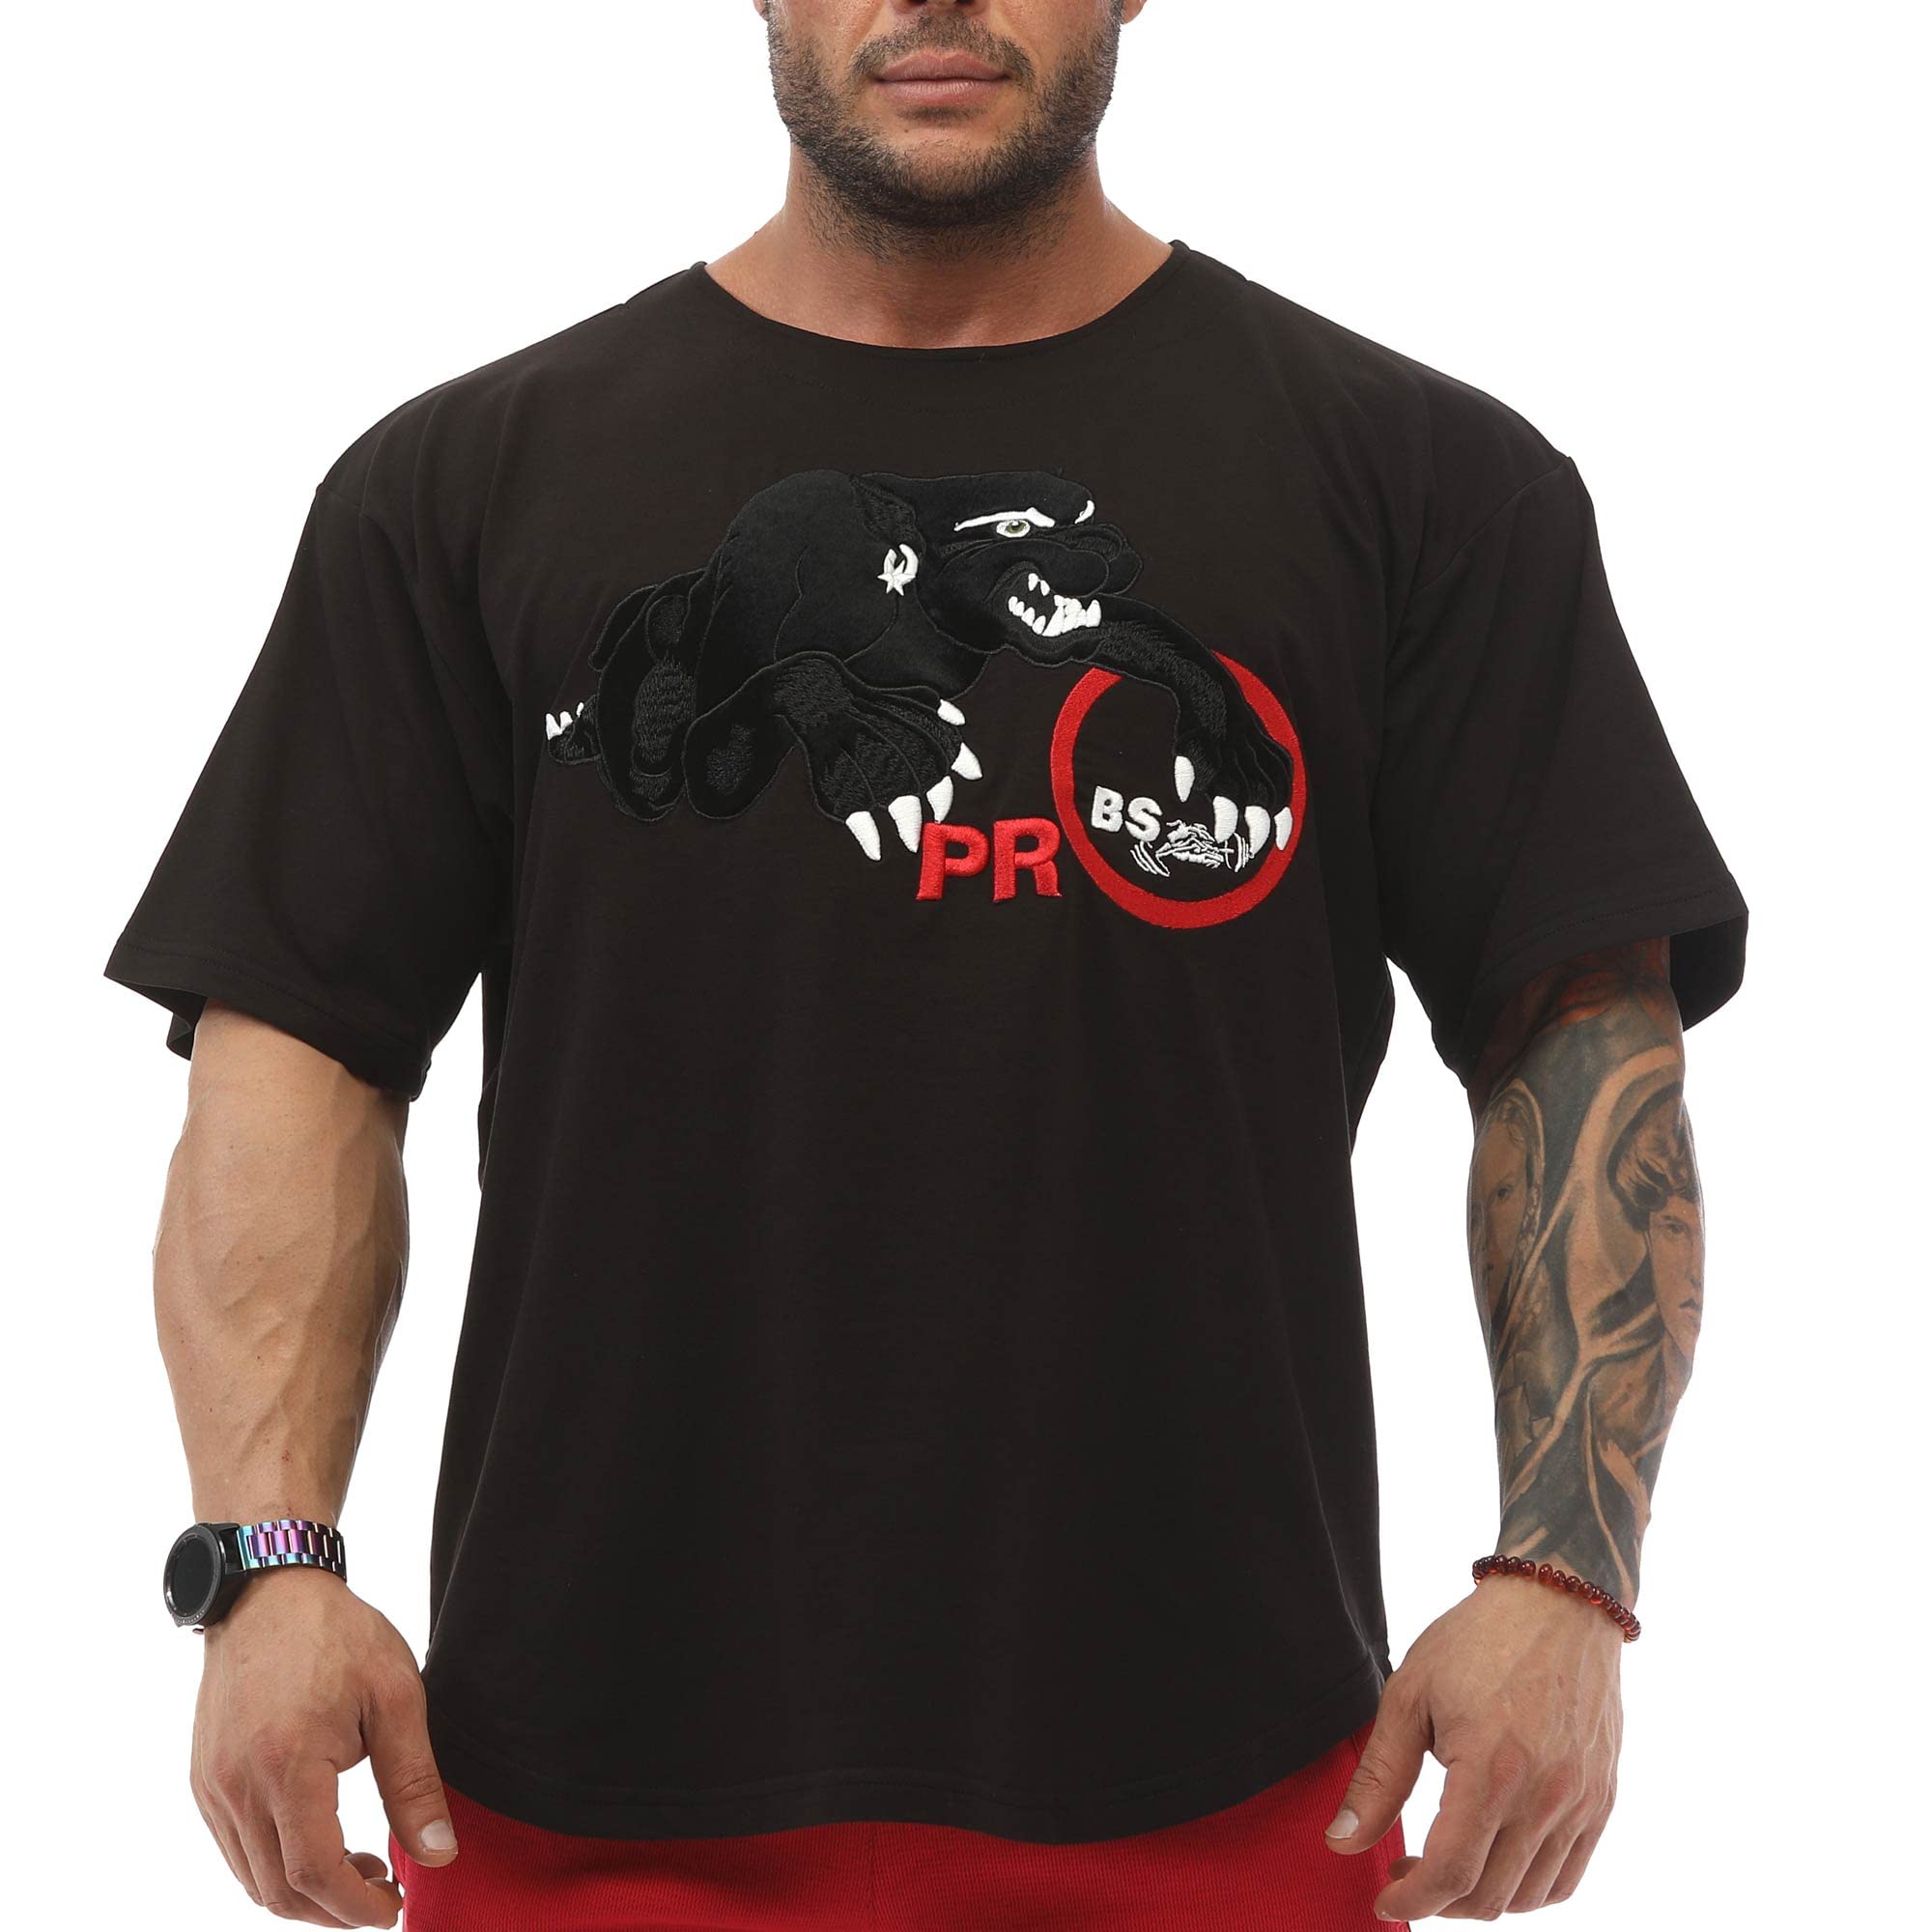 Big SM Sportswear MUSCLEWEAR Ragtop Rag Top Gym Fitness Sport T-Shirt Fitness Bodybuilding Herren halbarm 3232 schwarz 5XL